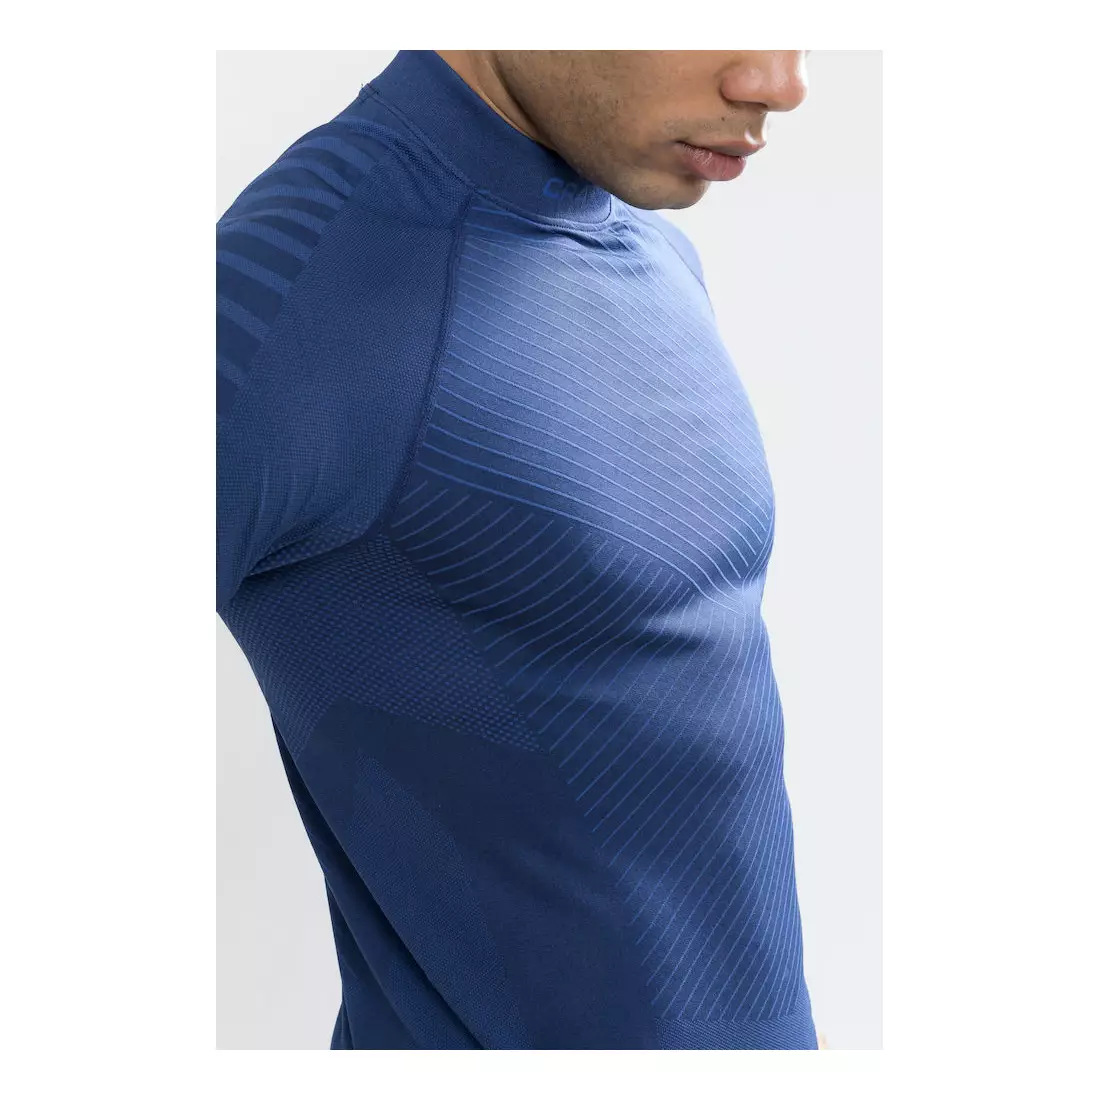 CRAFT ACTIVE INTENSITY - men's T-shirt, thermal underwear, long sleeve 1905337-391000